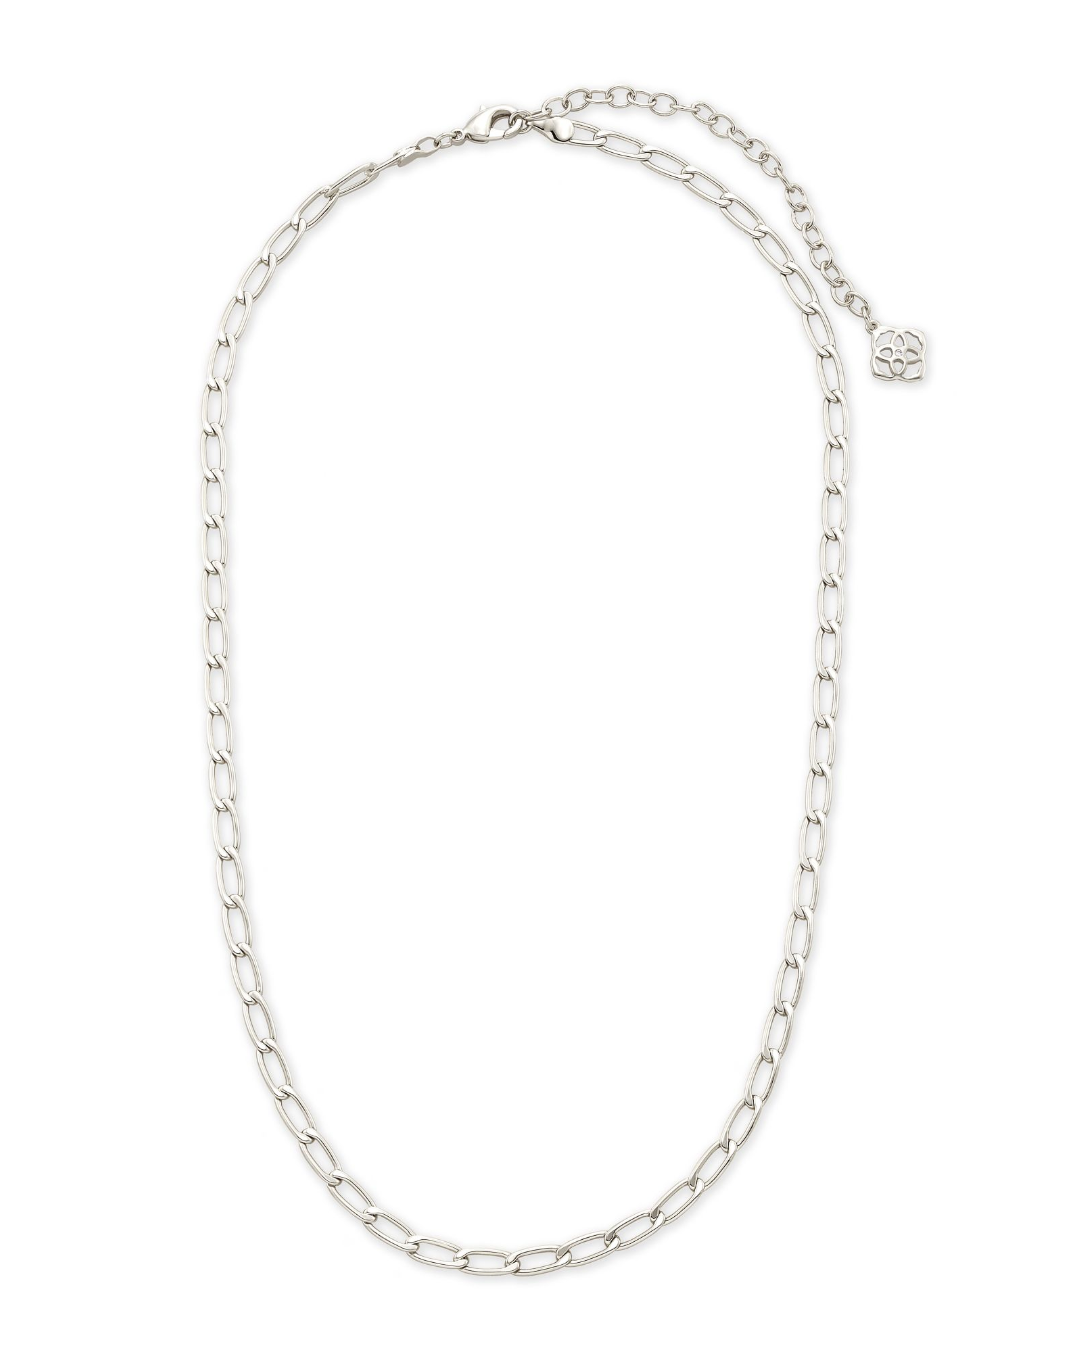 Merrick Chain Necklace